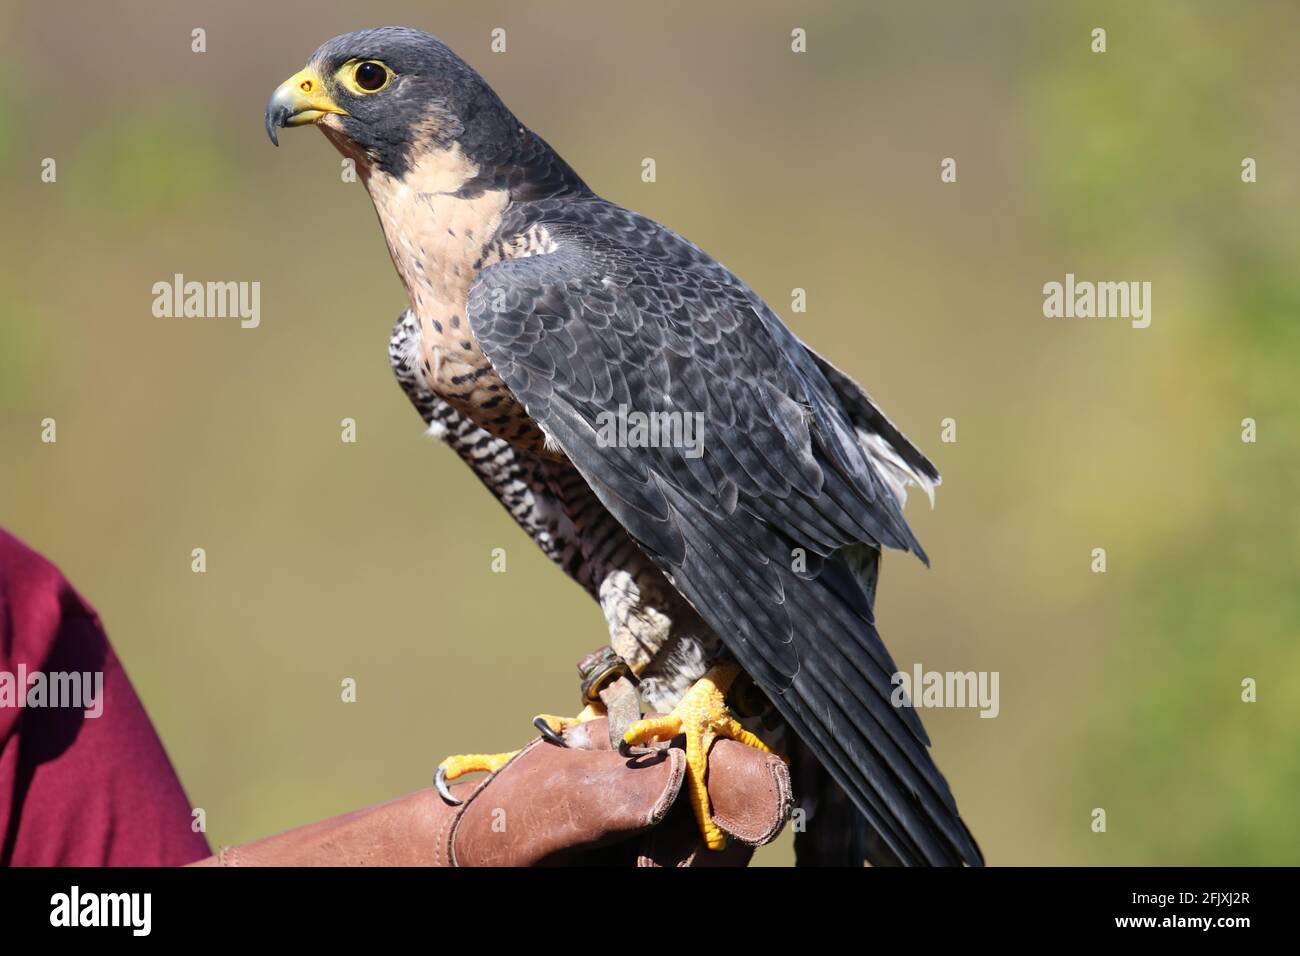 Majestic peregrine falcon perched on falconer's leather glove Stock Photo